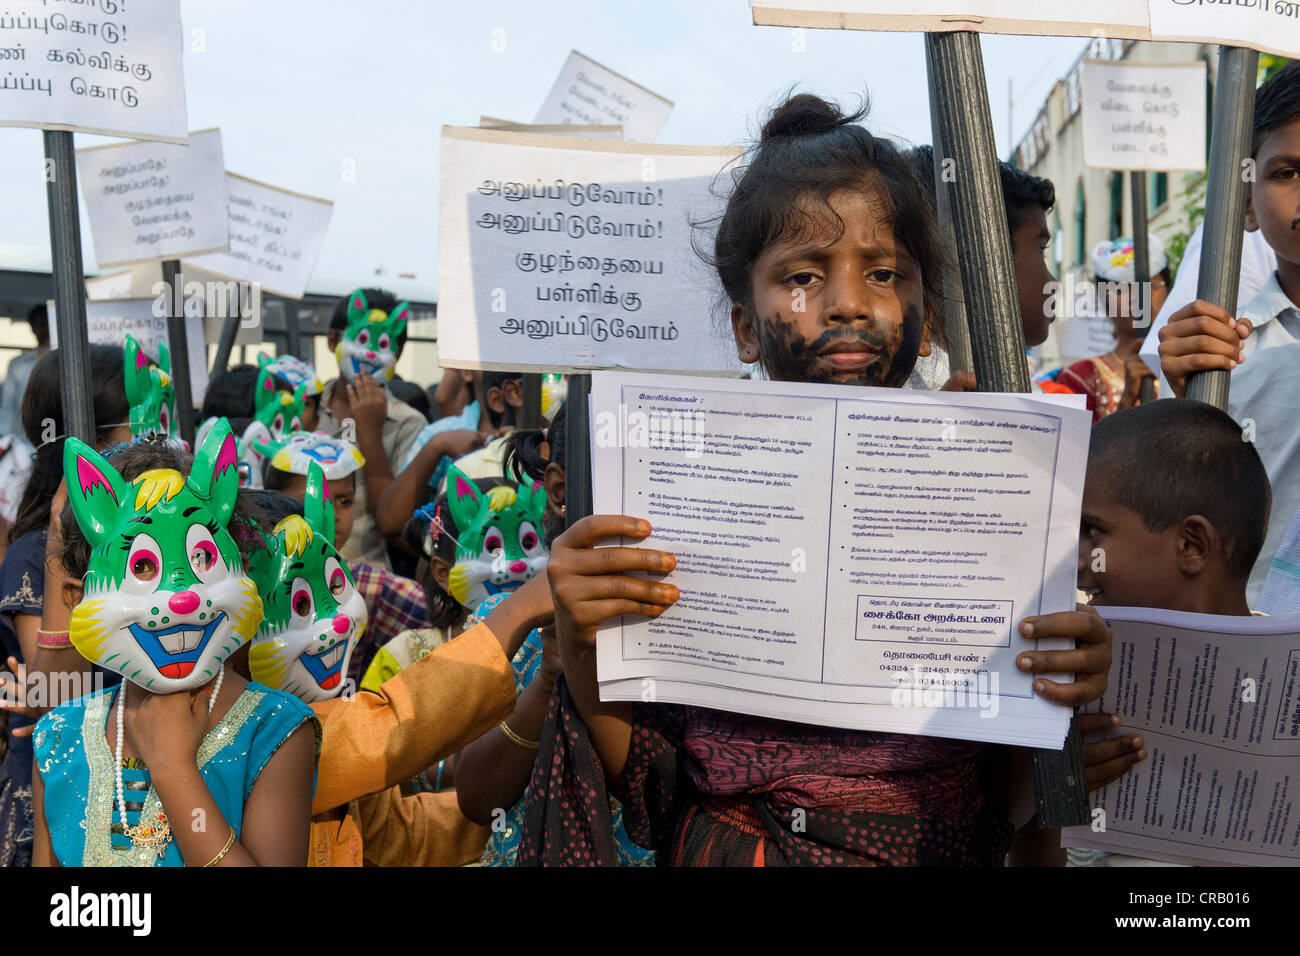 Demonstration against child labor, Karur, Tamil Nadu, India, Asia Stock Photo